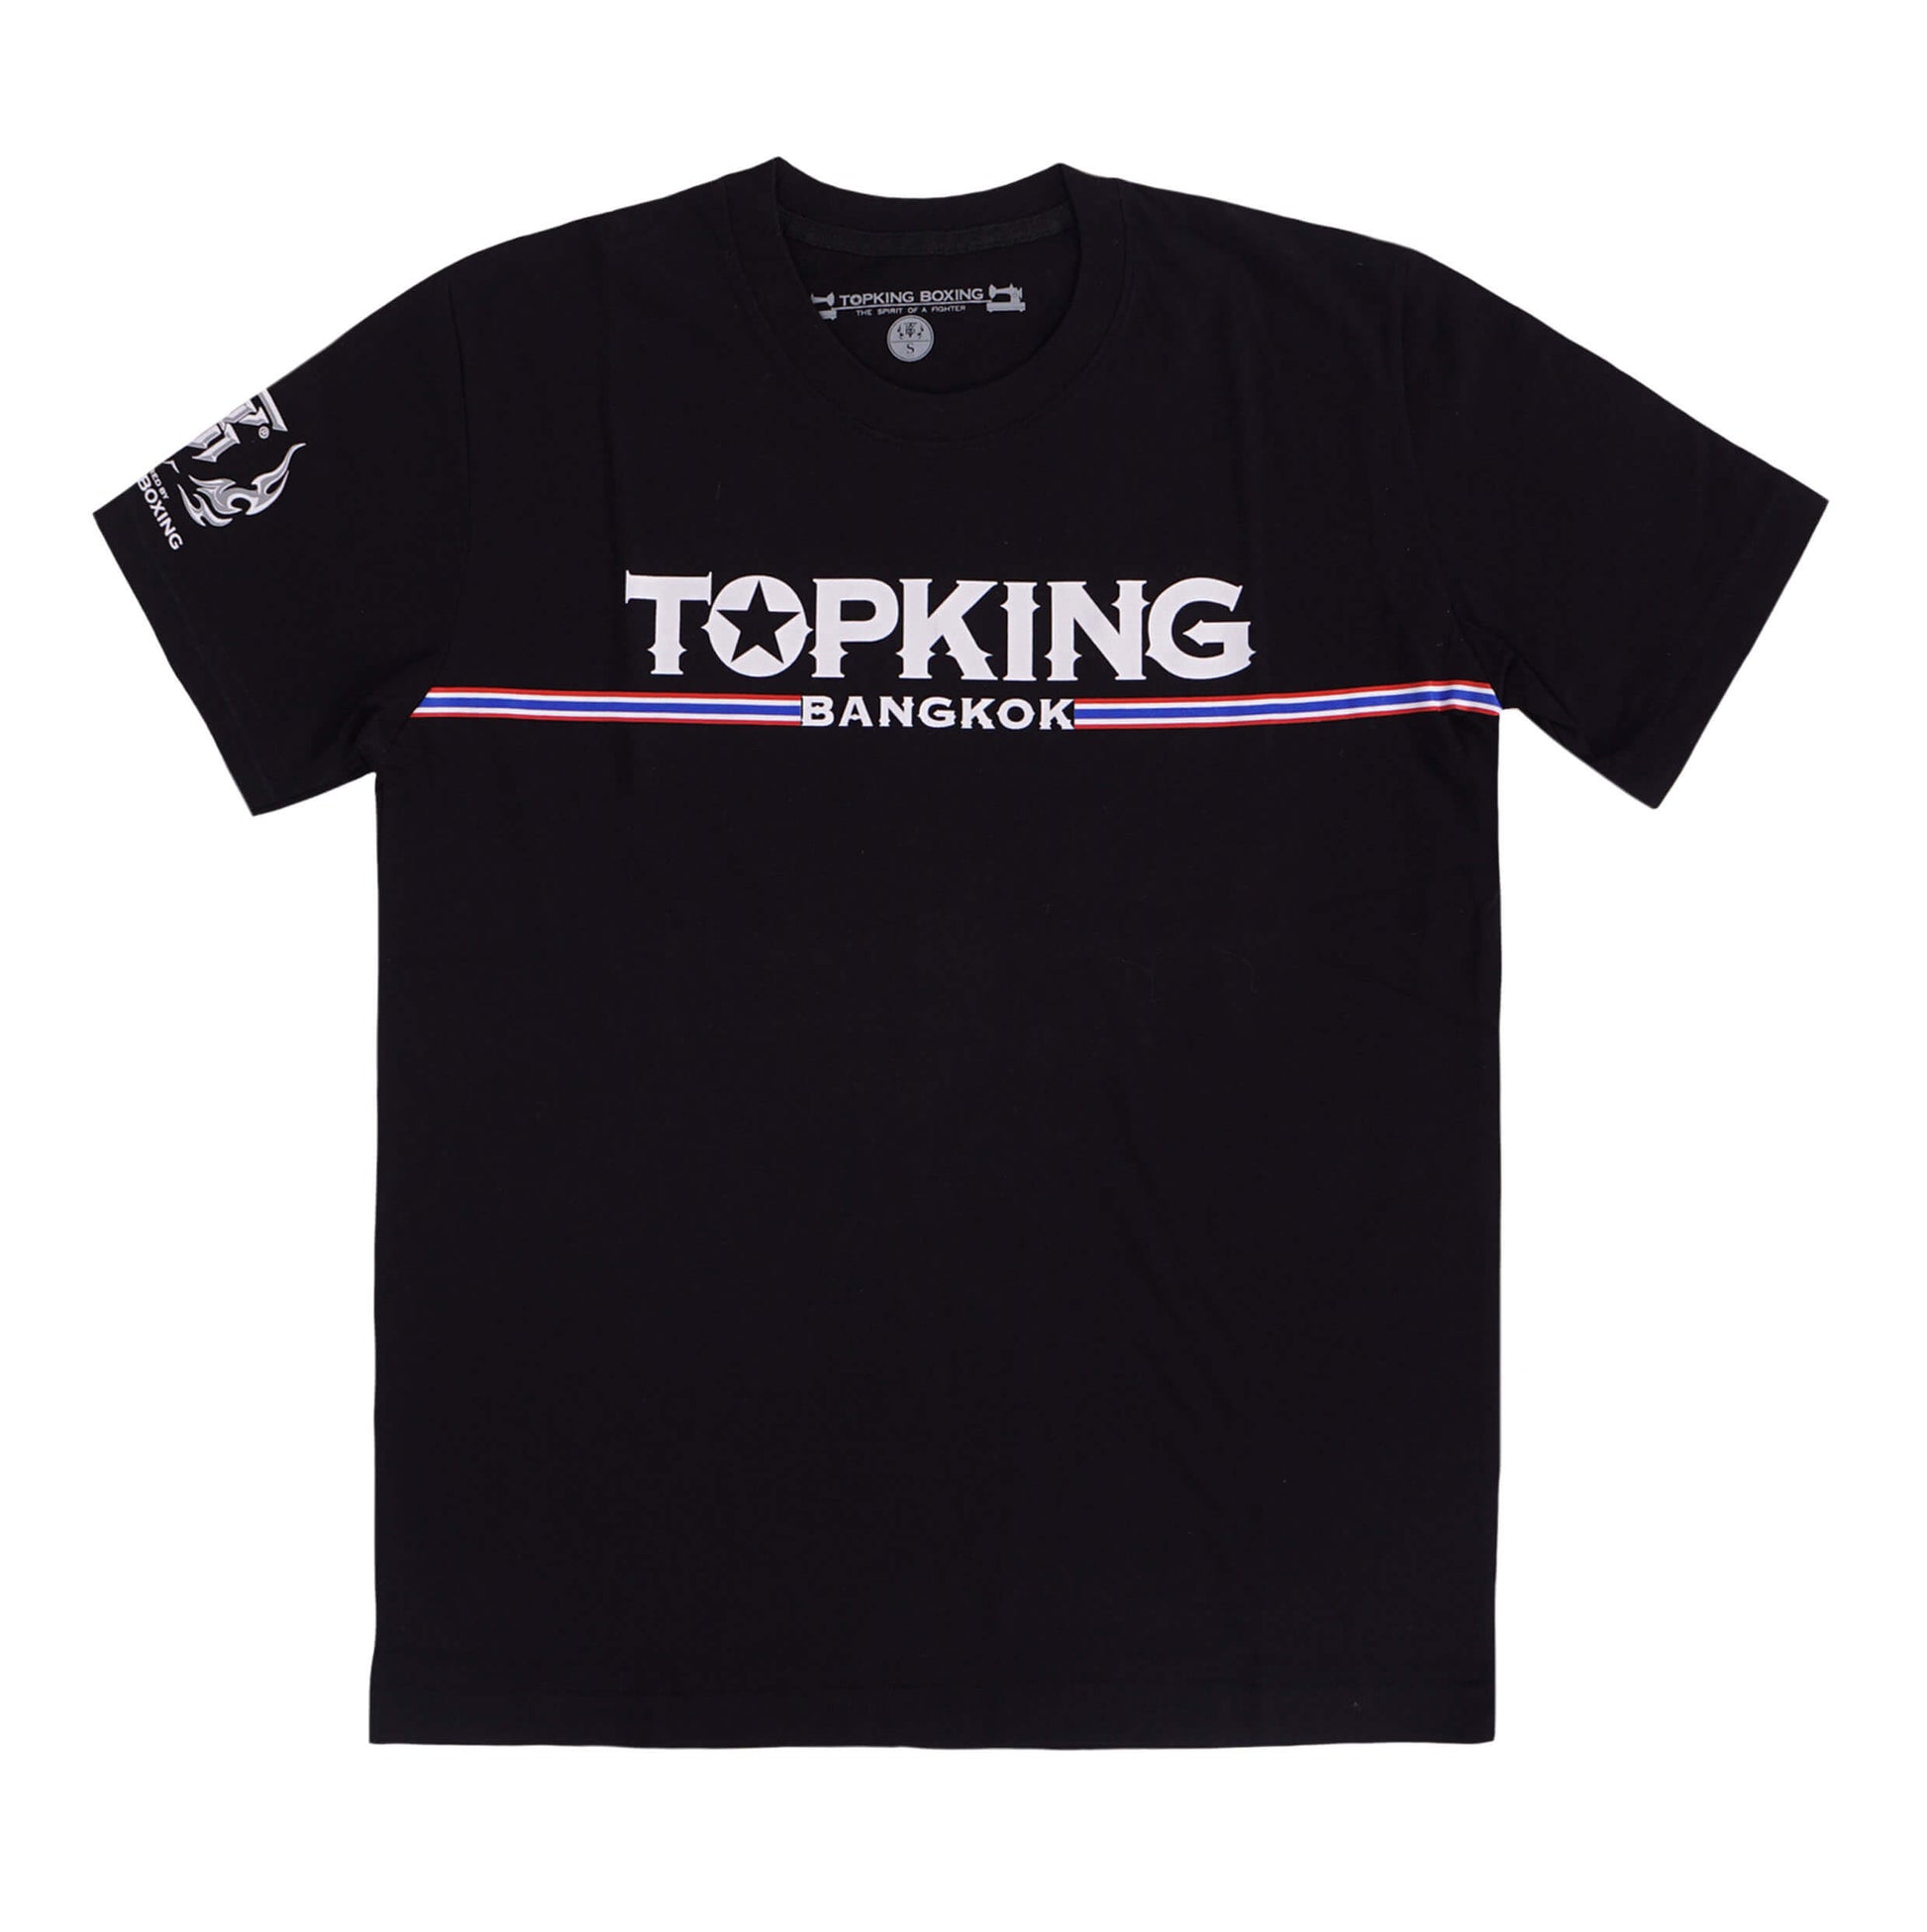 Top King Boxing t-shirt: Bangkok 'spirit of a fighter' Black front